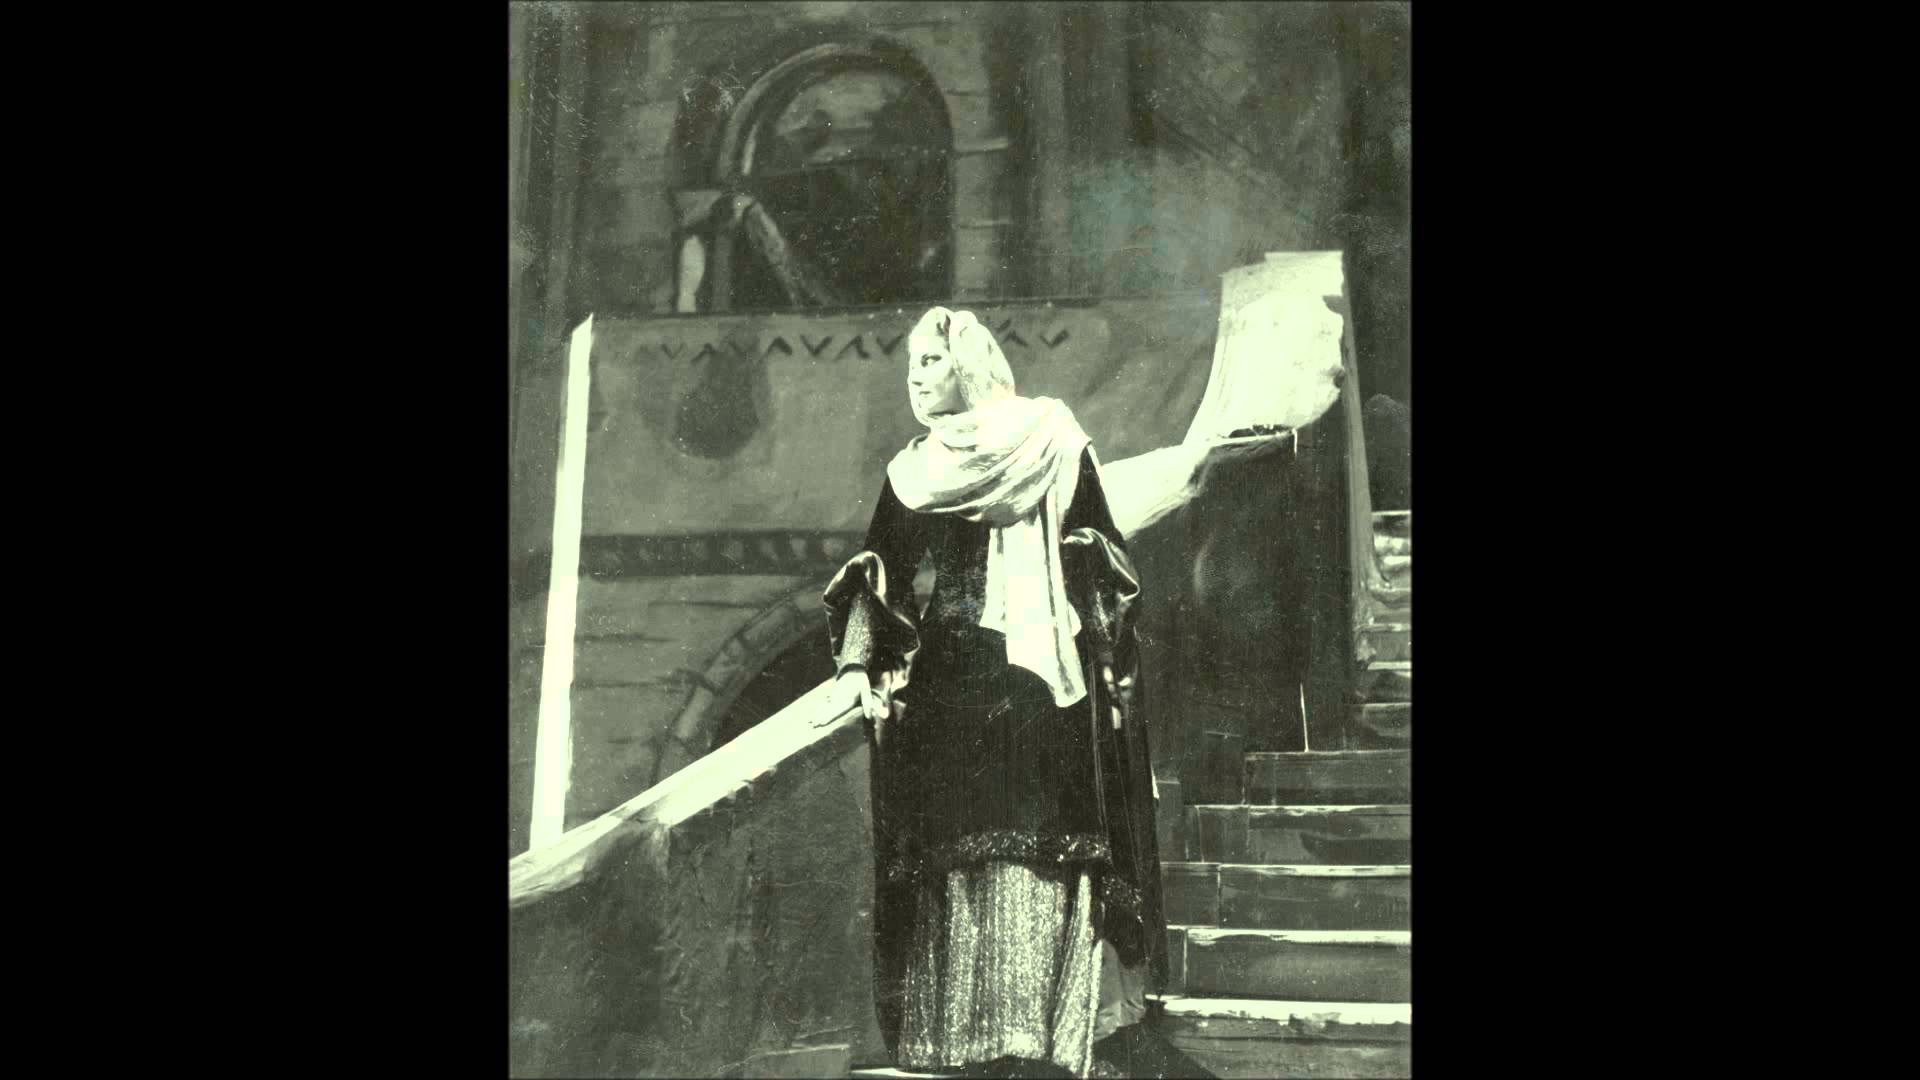 Giuseppe Verdi: The Sleepwalking Scene from “Macbeth”